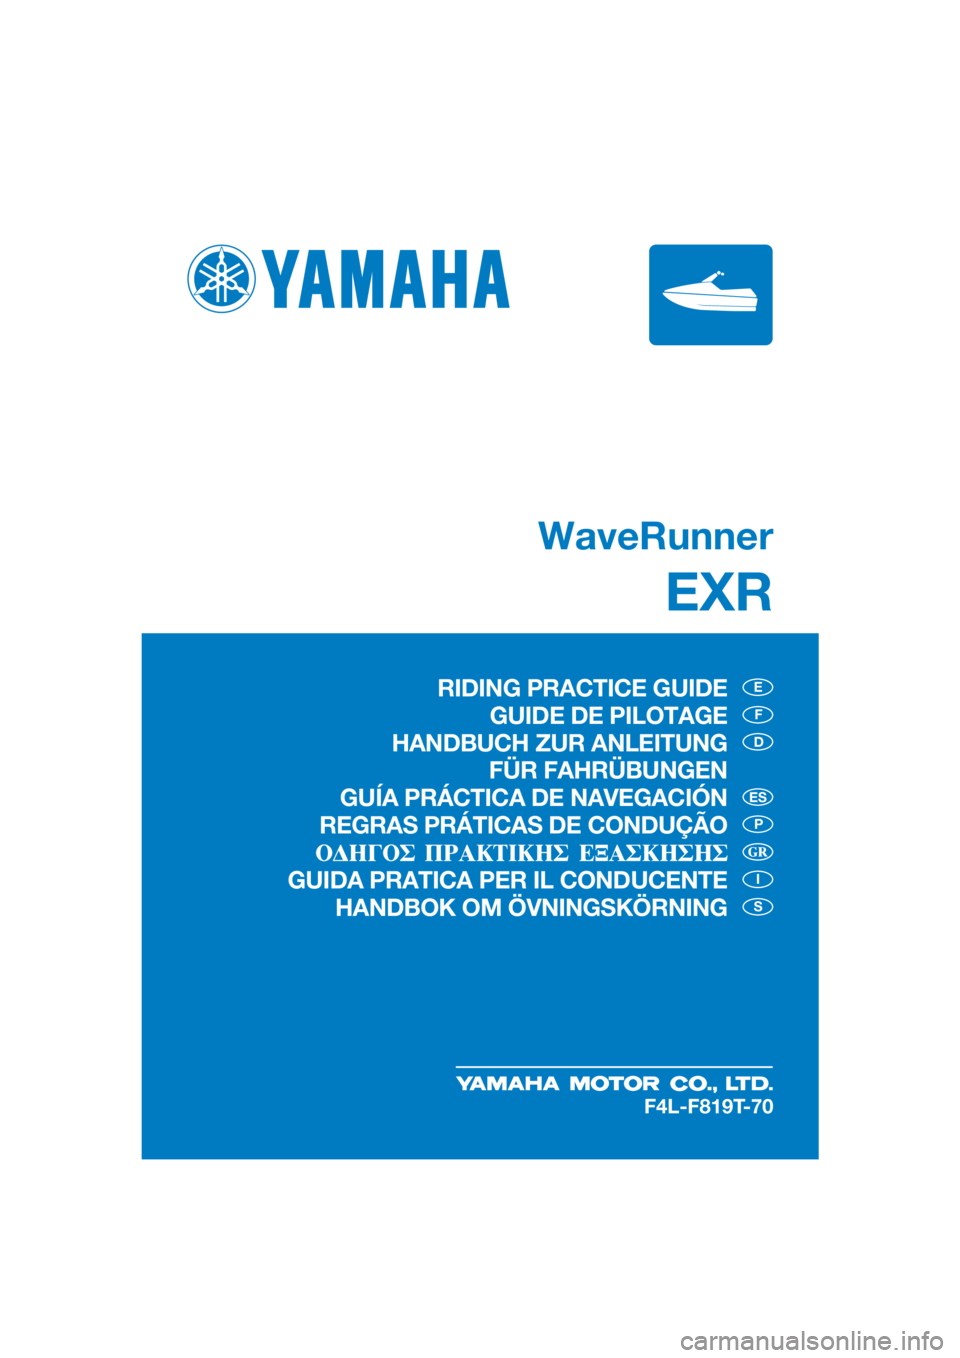 YAMAHA FJR1300 2019  Manuale de Empleo (in Spanish) WaveRunner
EXR
E
F
D
P
I
S
ES
F4L-F819T-70
RIDING PRACTICE GUIDE
GUIDE DE PILOTAGE
HANDBUCH ZUR ANLEITUNG
 FÜR FAHRÜBUNGEN
GUÍA PRÁCTICA DE NAVEGACIÓN
REGRAS PRÁTICAS DE CONDUÇÃO
GUIDA PRATICA